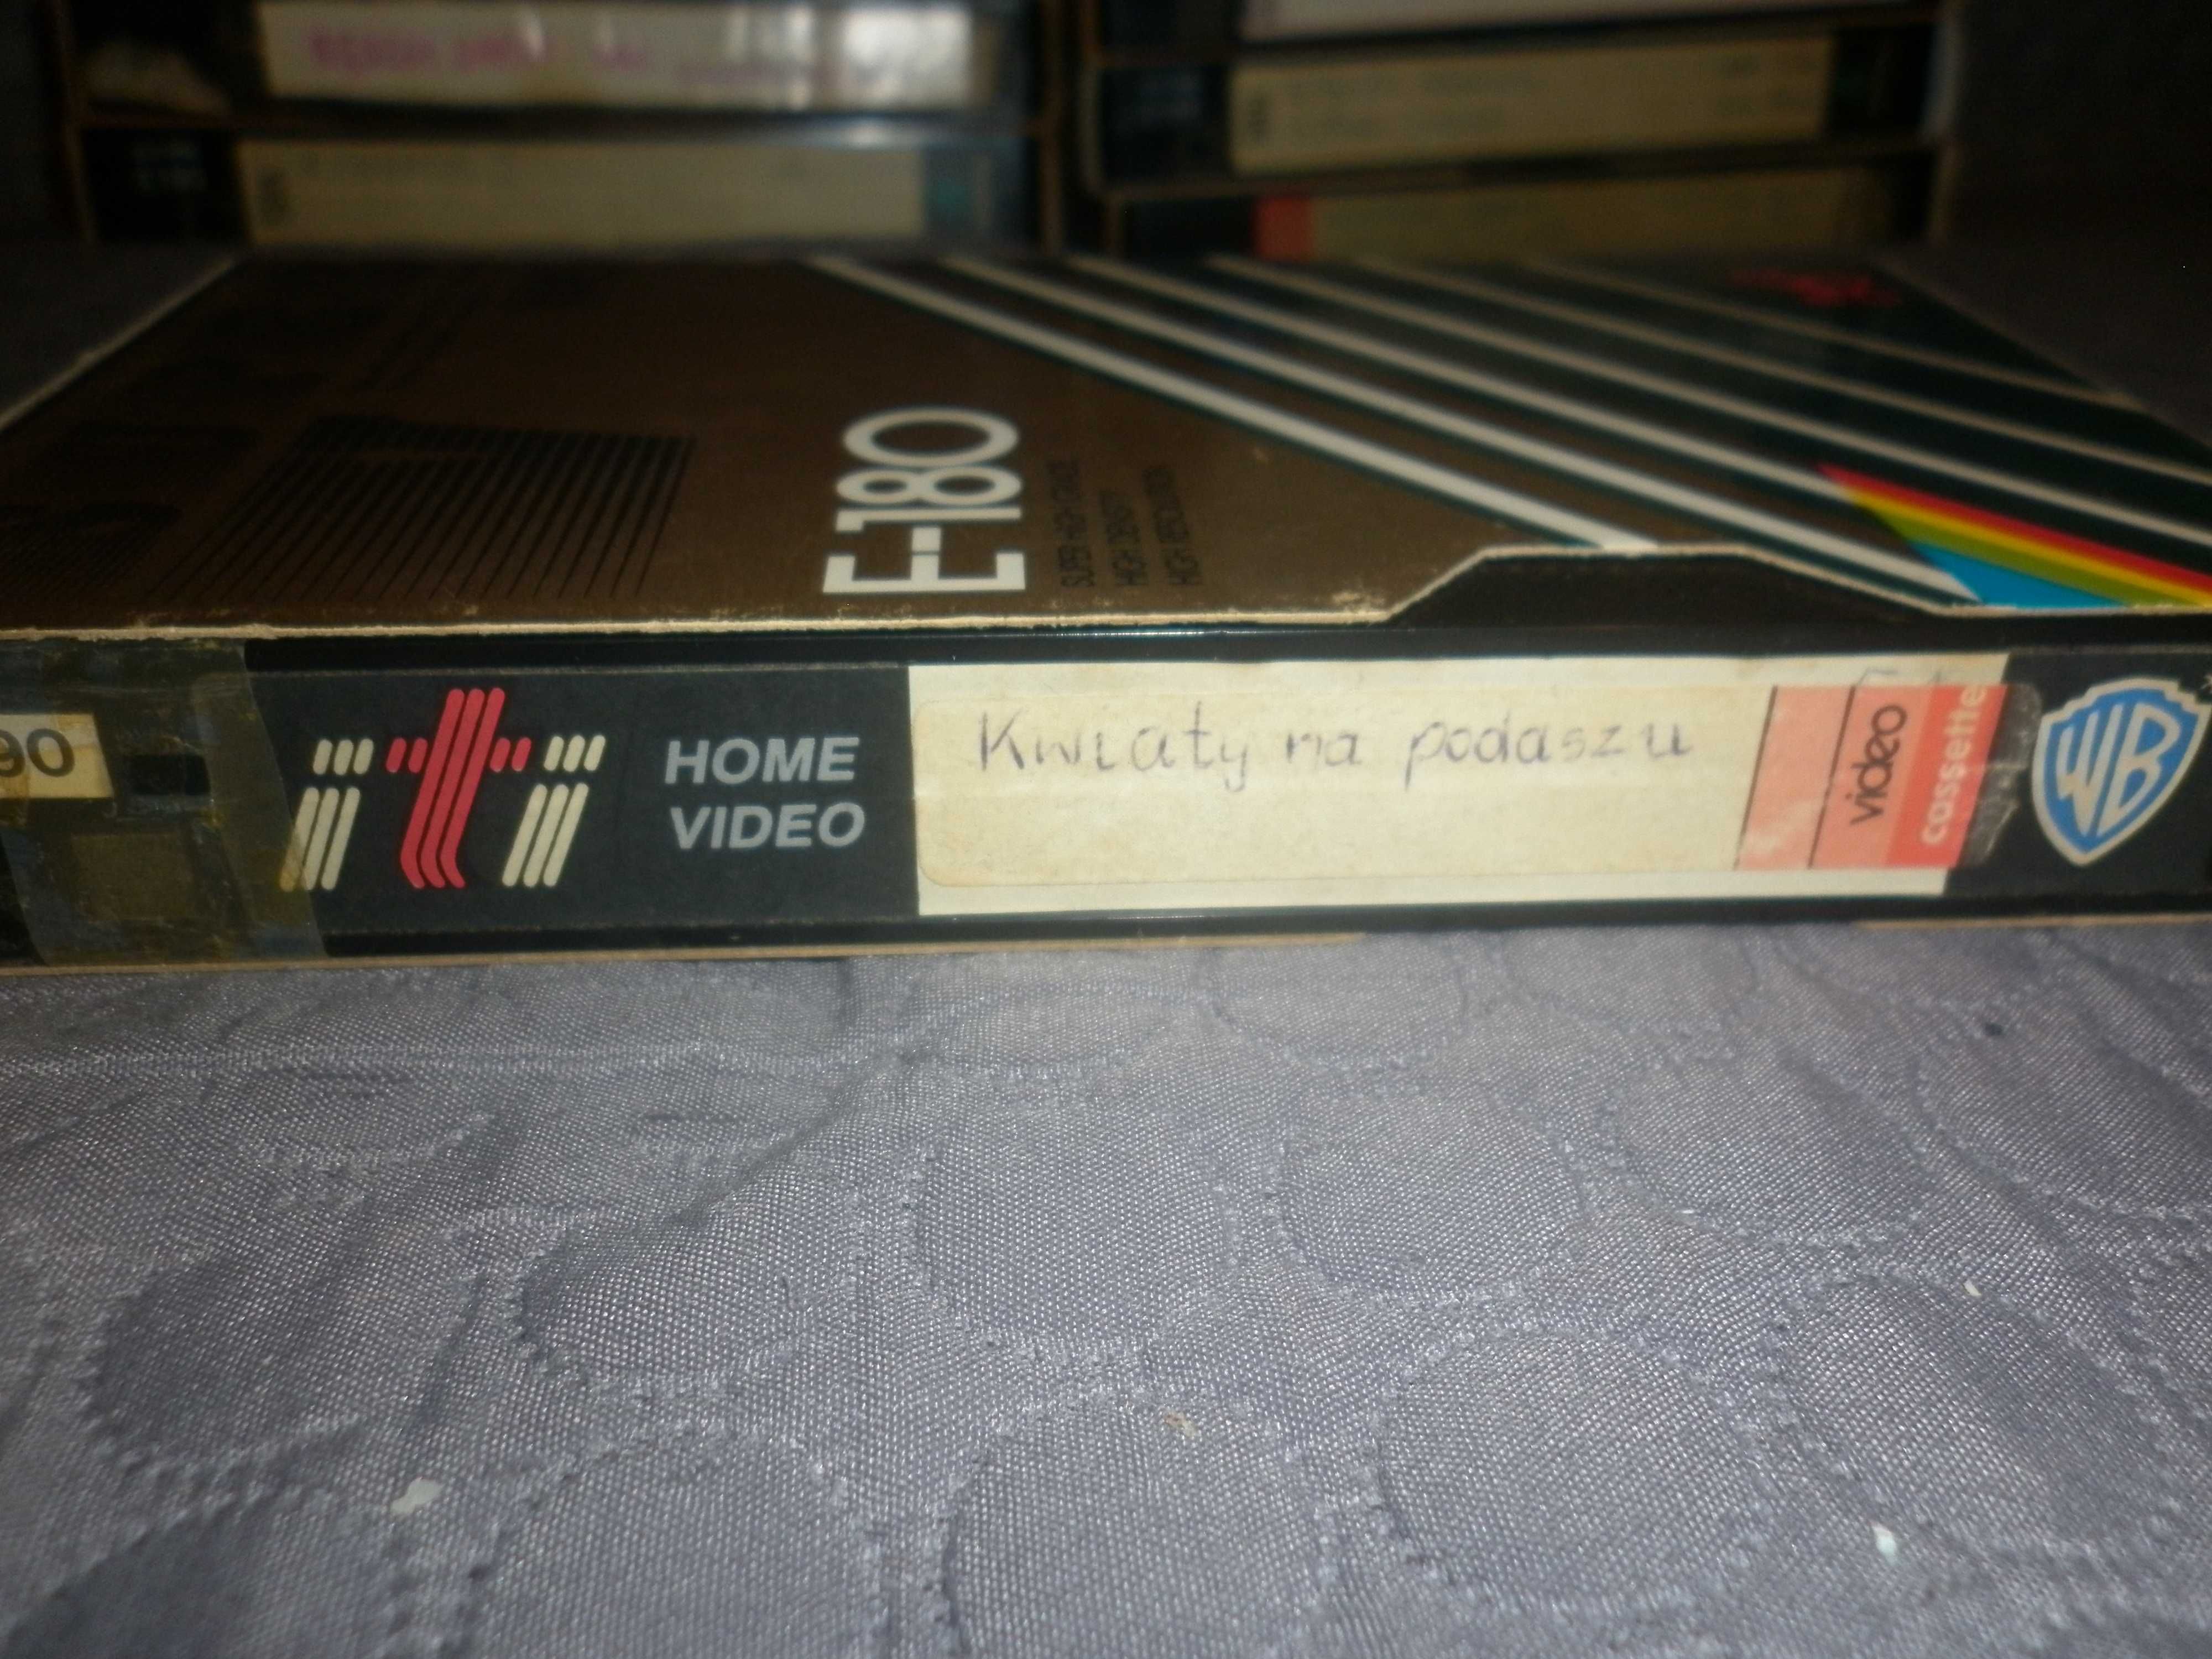 Kwiaty na poddaszu na VHS